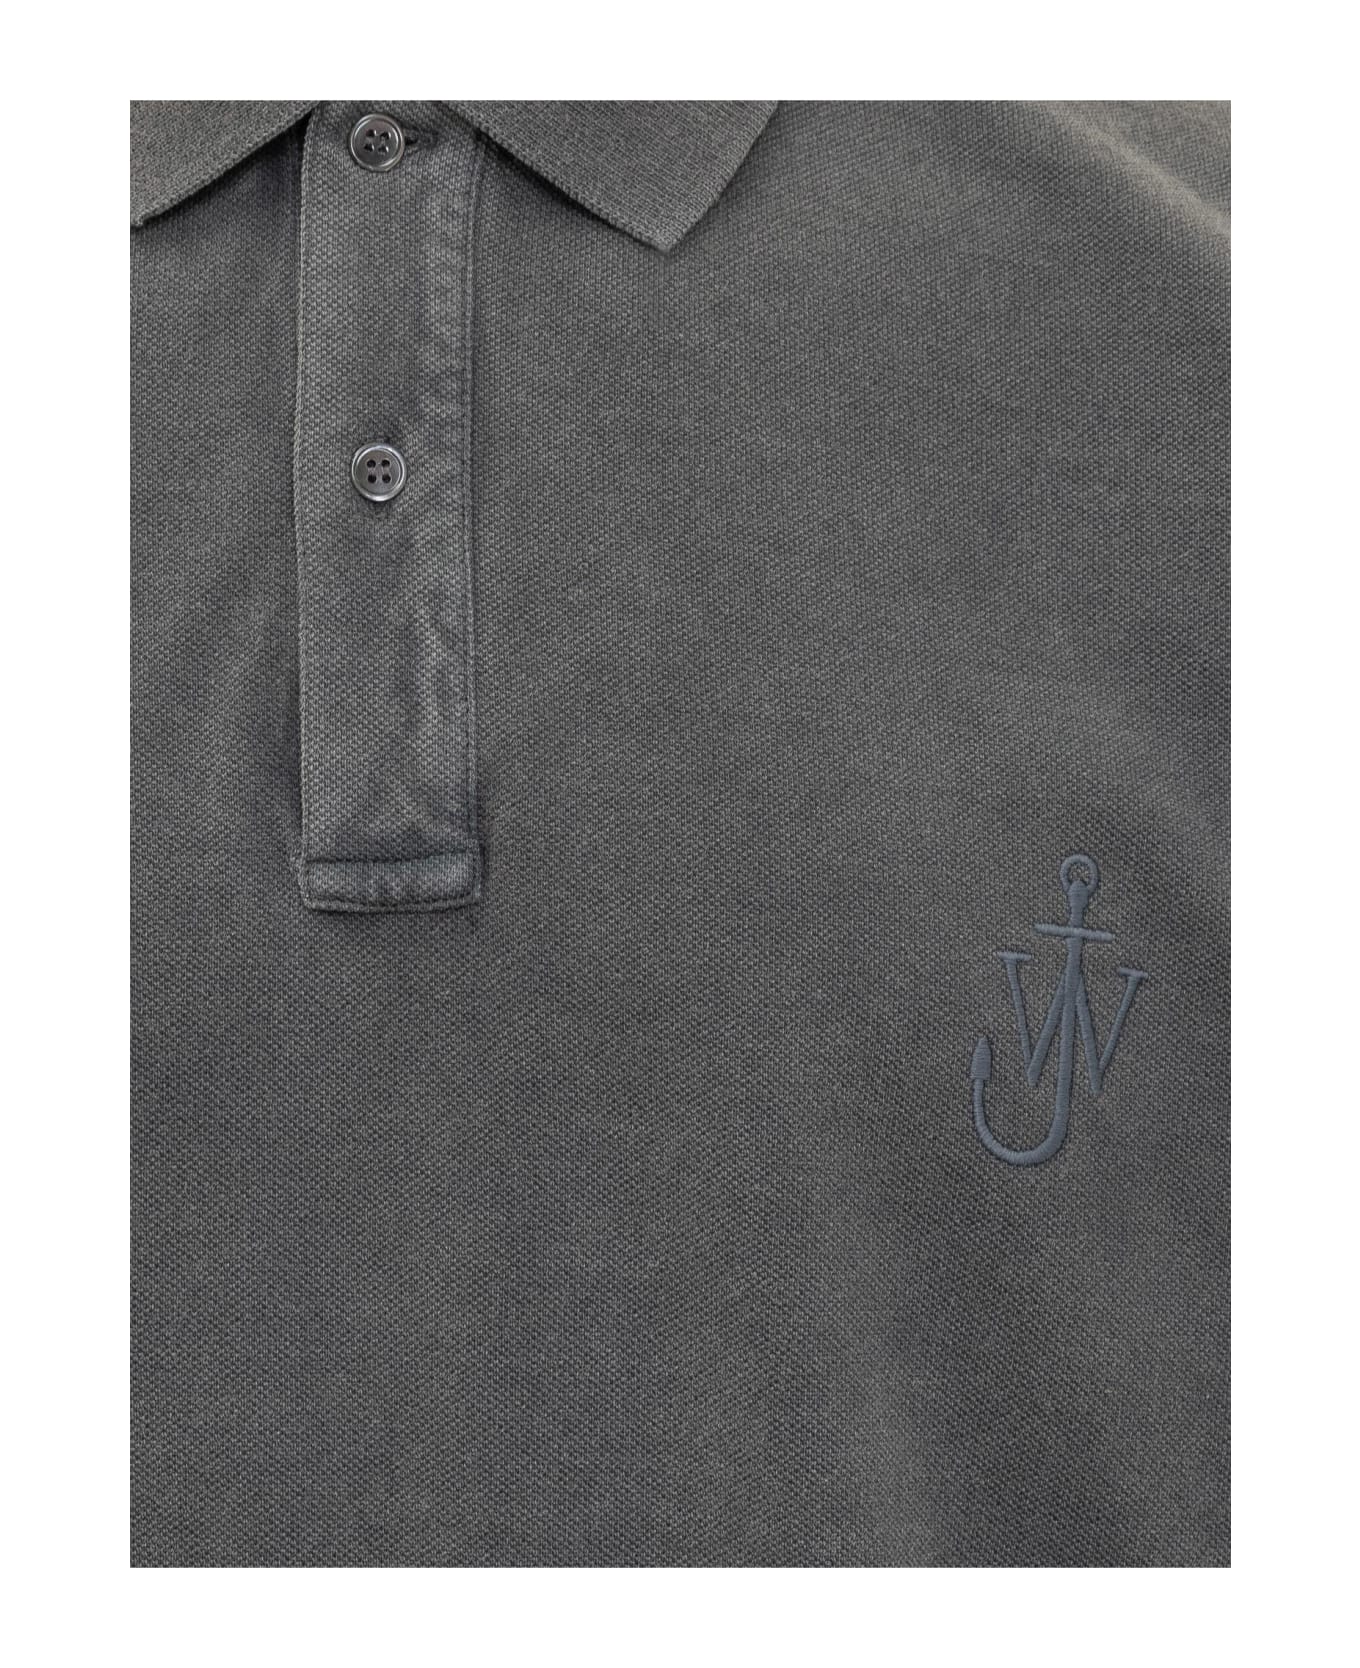 J.W. Anderson Jwa Anchor Polo Shirt - CHARCOAL